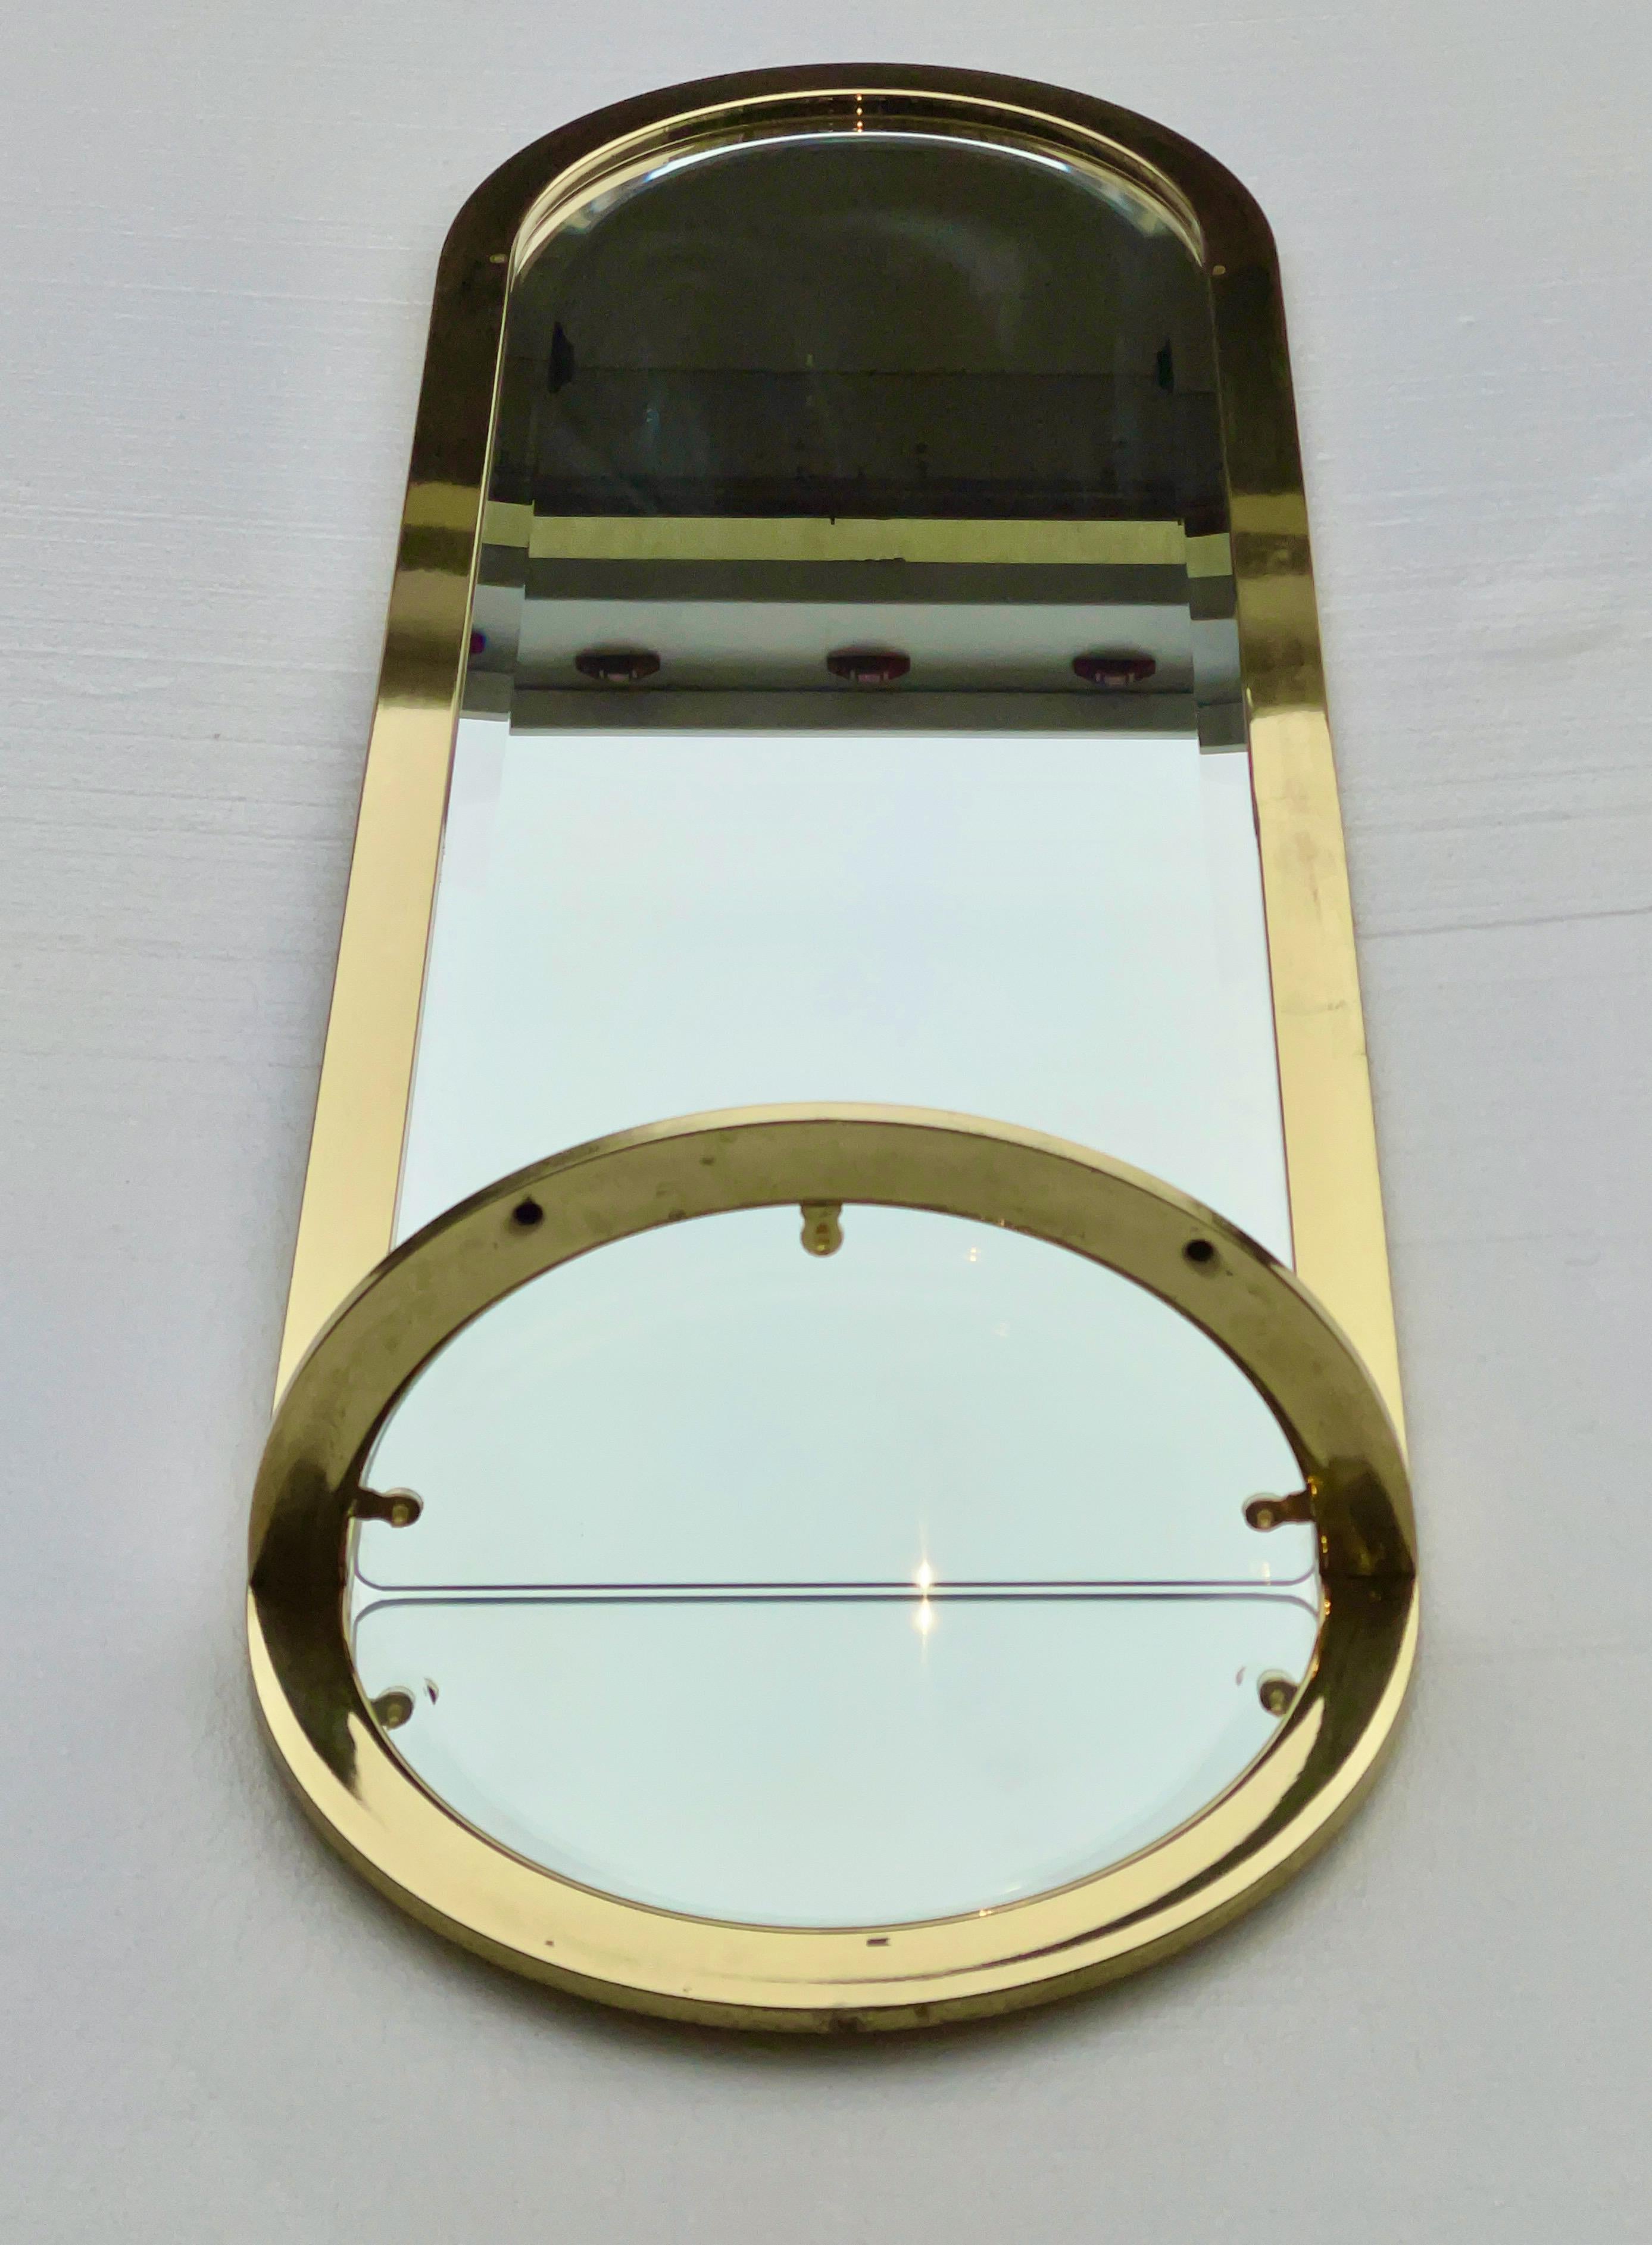 DIA Design Institute America Brass Racetrack Oval Mirror with Demilune Shelf For Sale 3